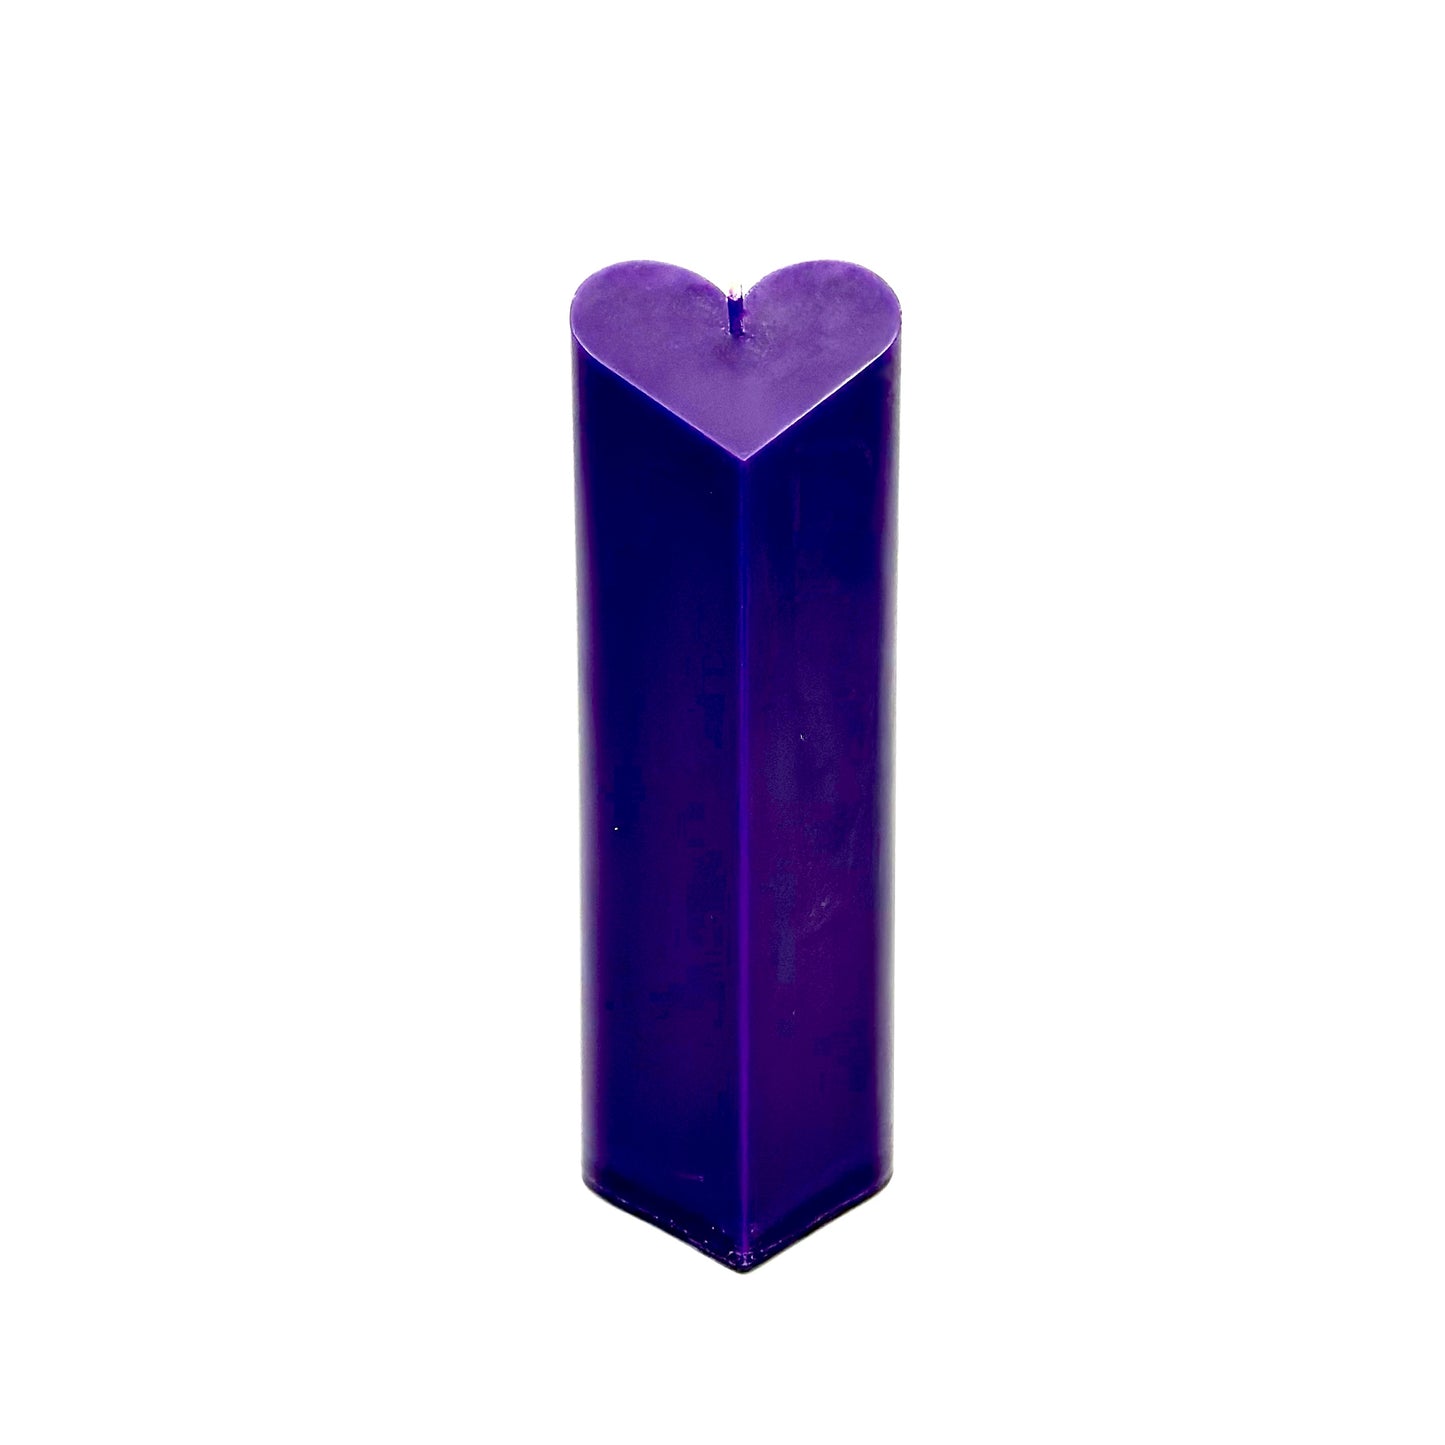 Дизайнерская свеча "Сердце", темно-фиолетовая, 21х6,5х6.